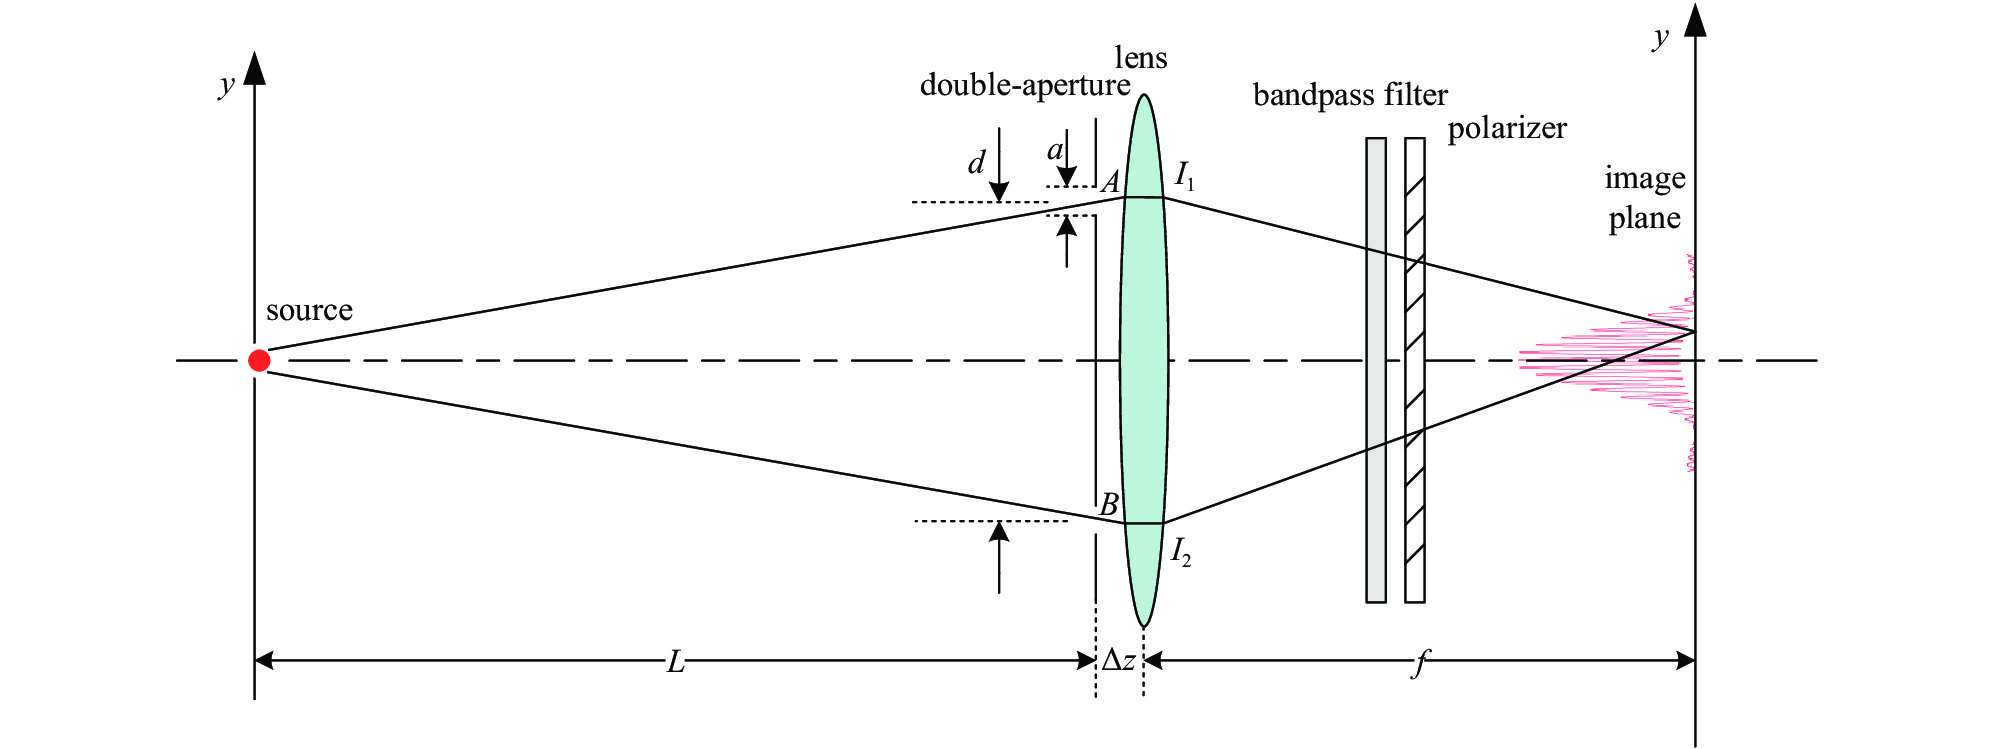 Schematic diagram of interferometer